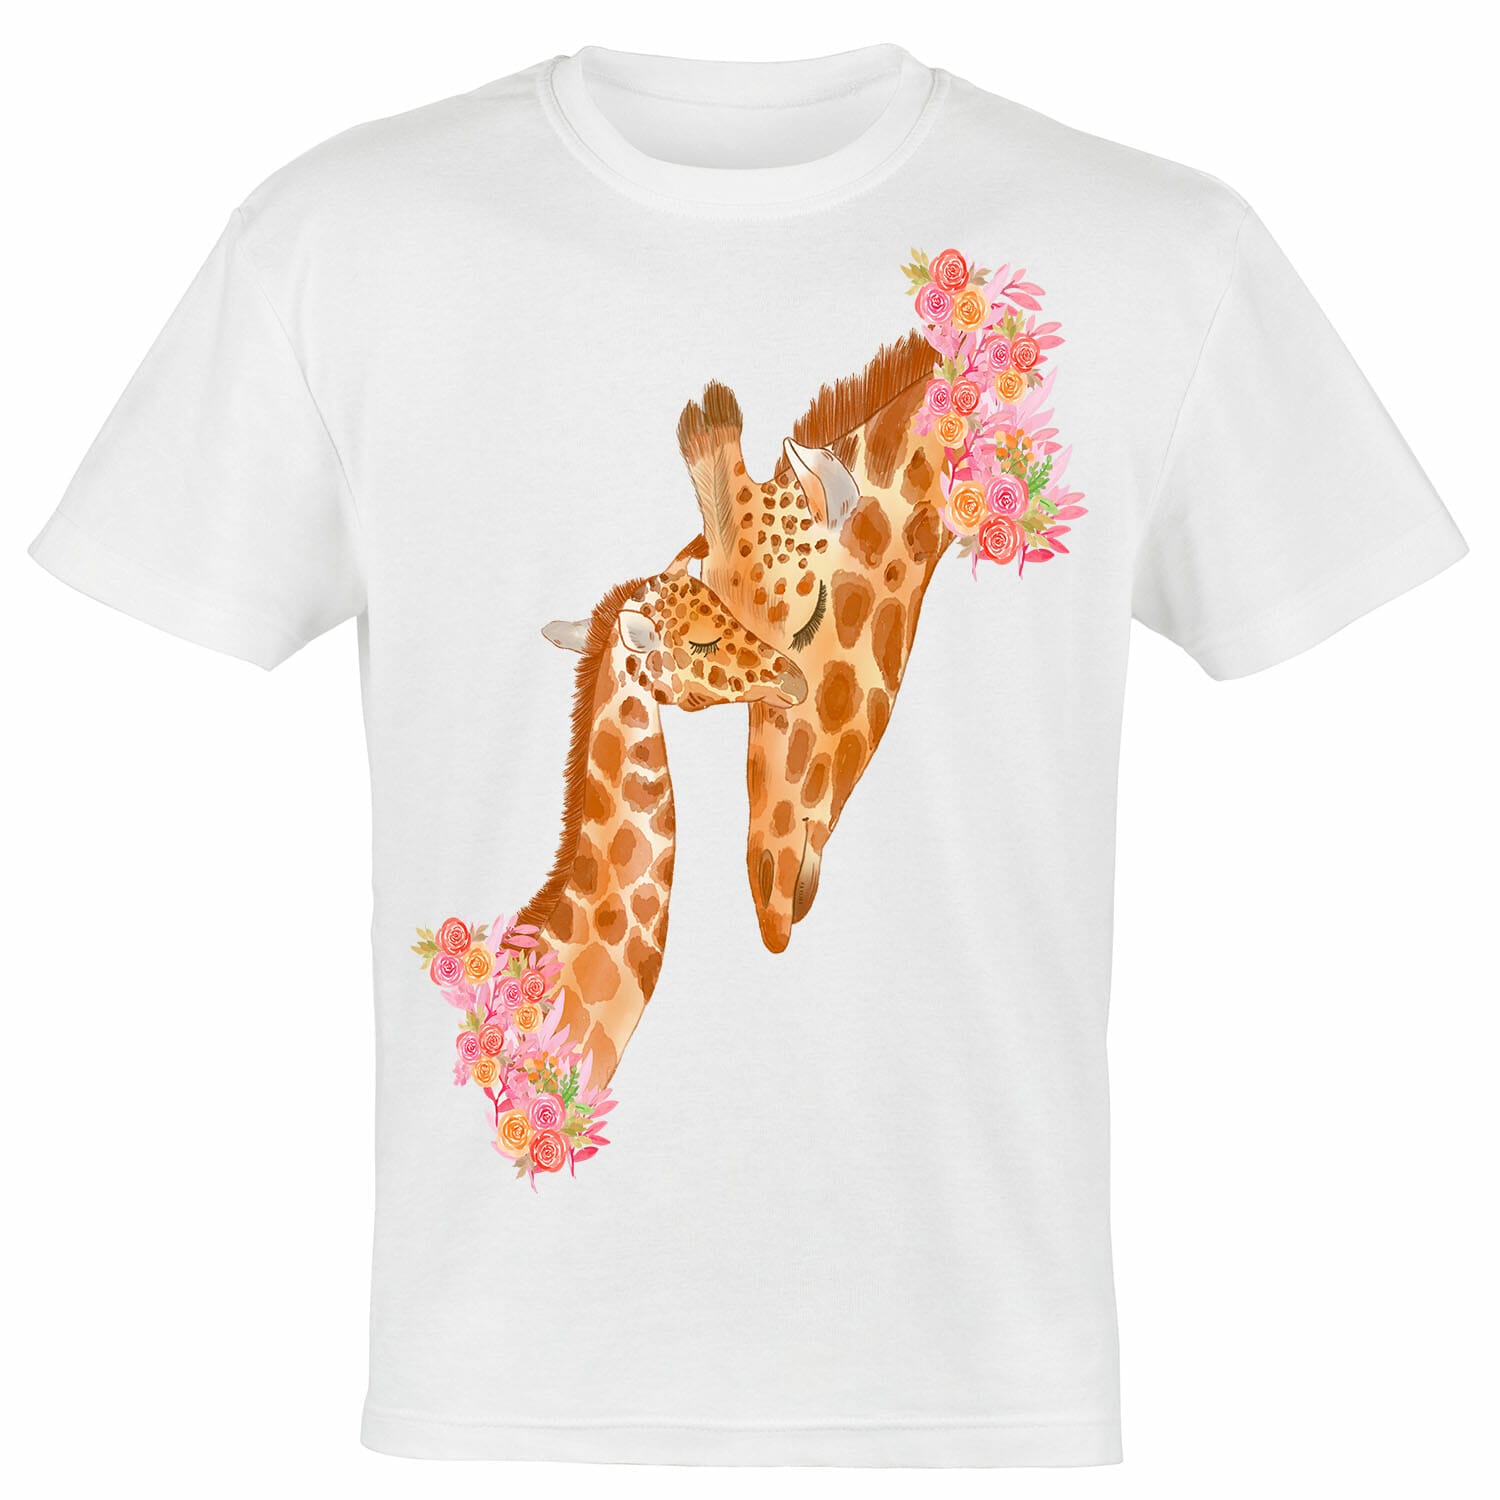 Mom And Baby Giraffe Tshirt Design